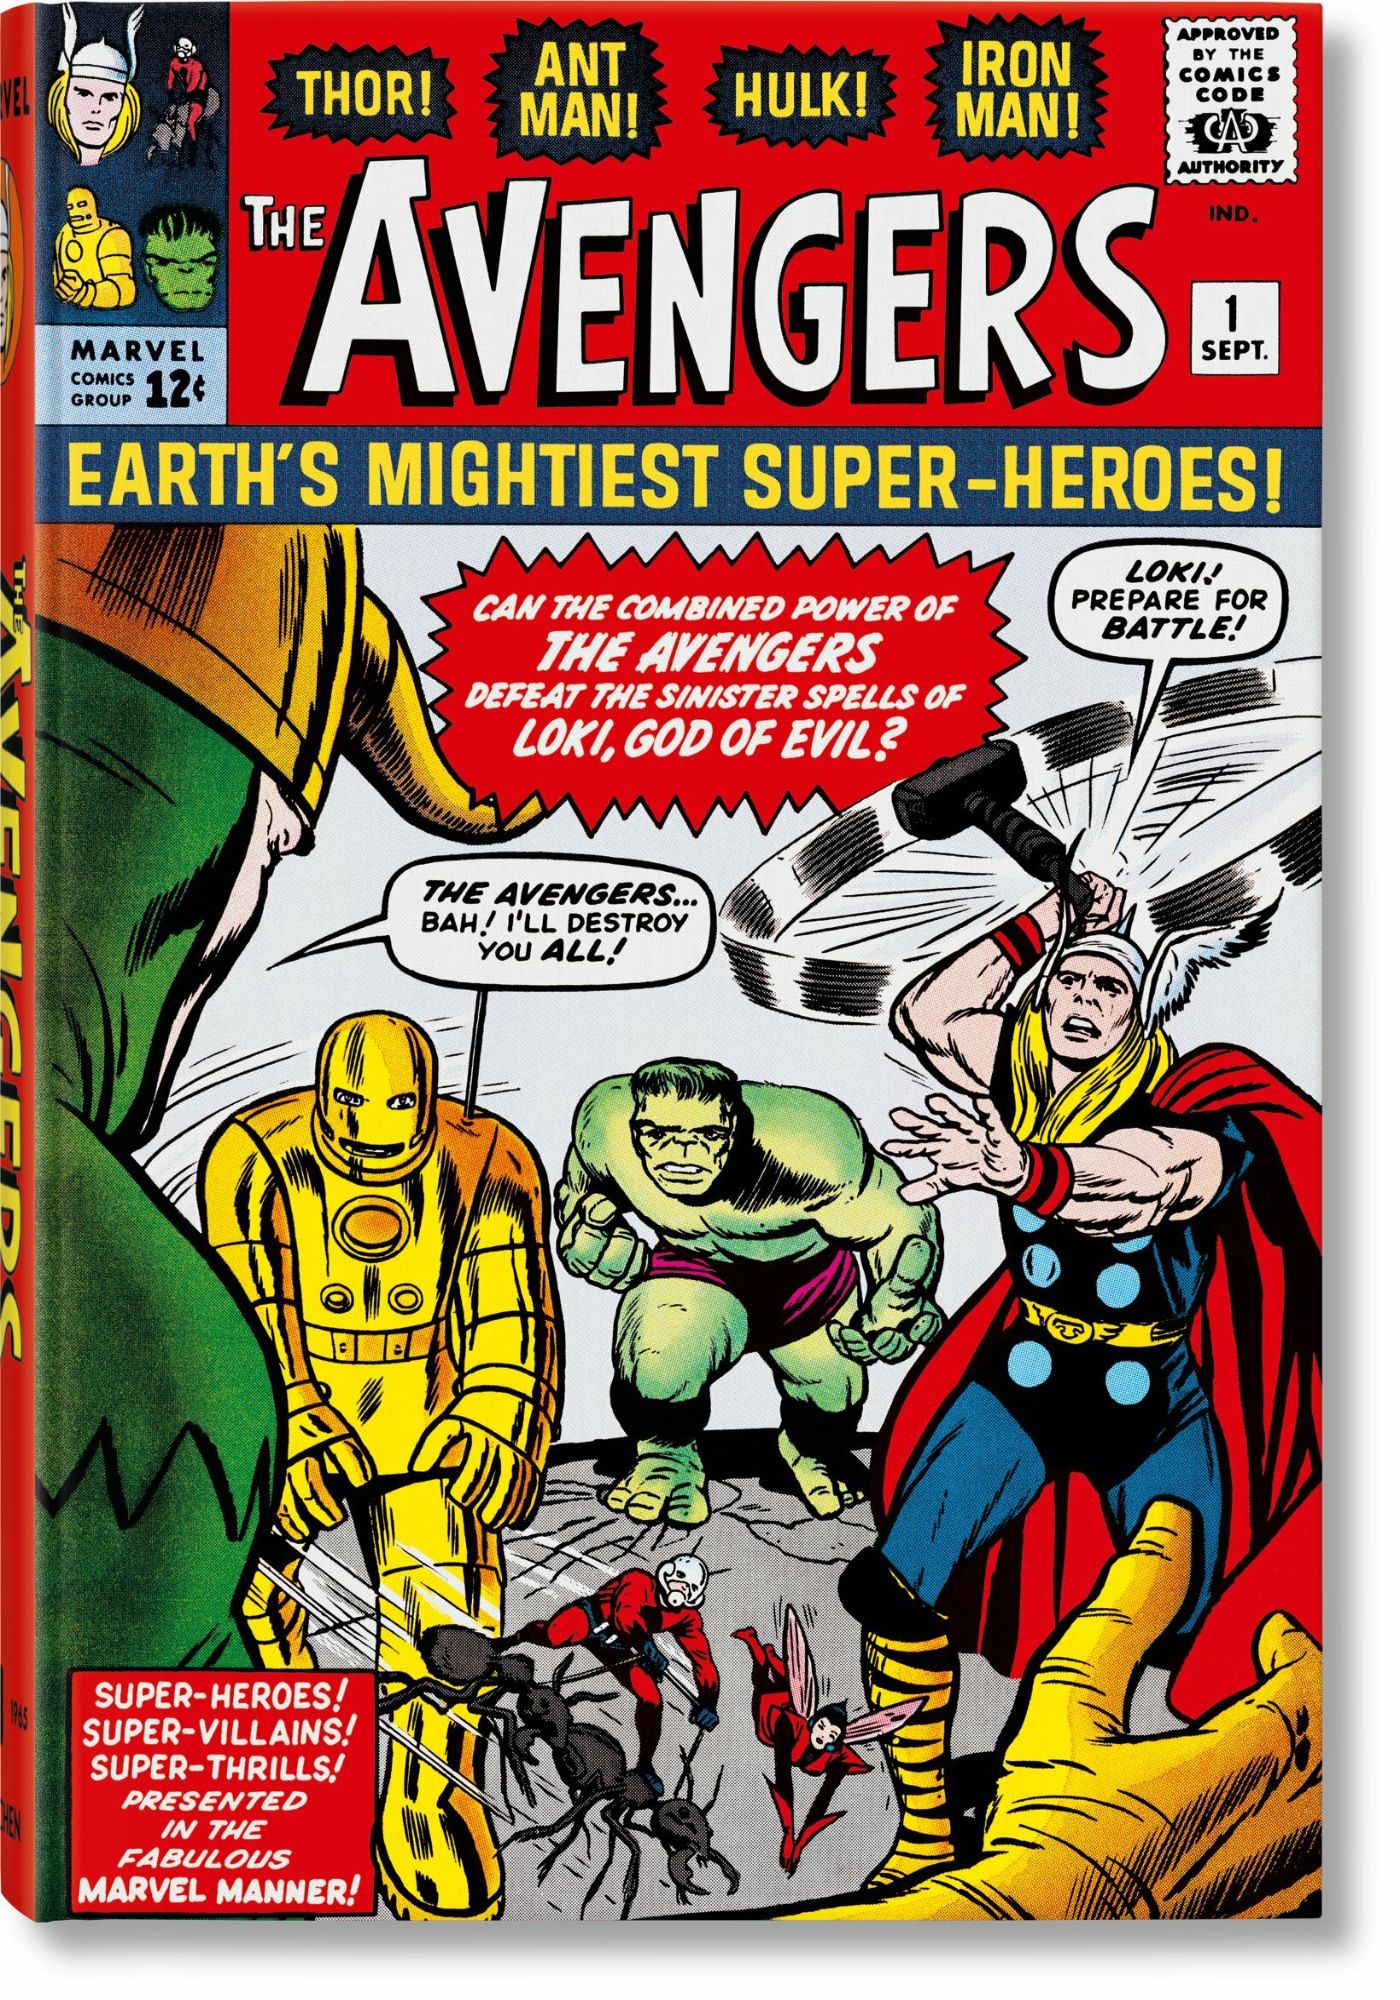 marvel_comics_library_avengers_vol_1_1963_1965_xl_gb_3d_01162_2203301006_id_1387199